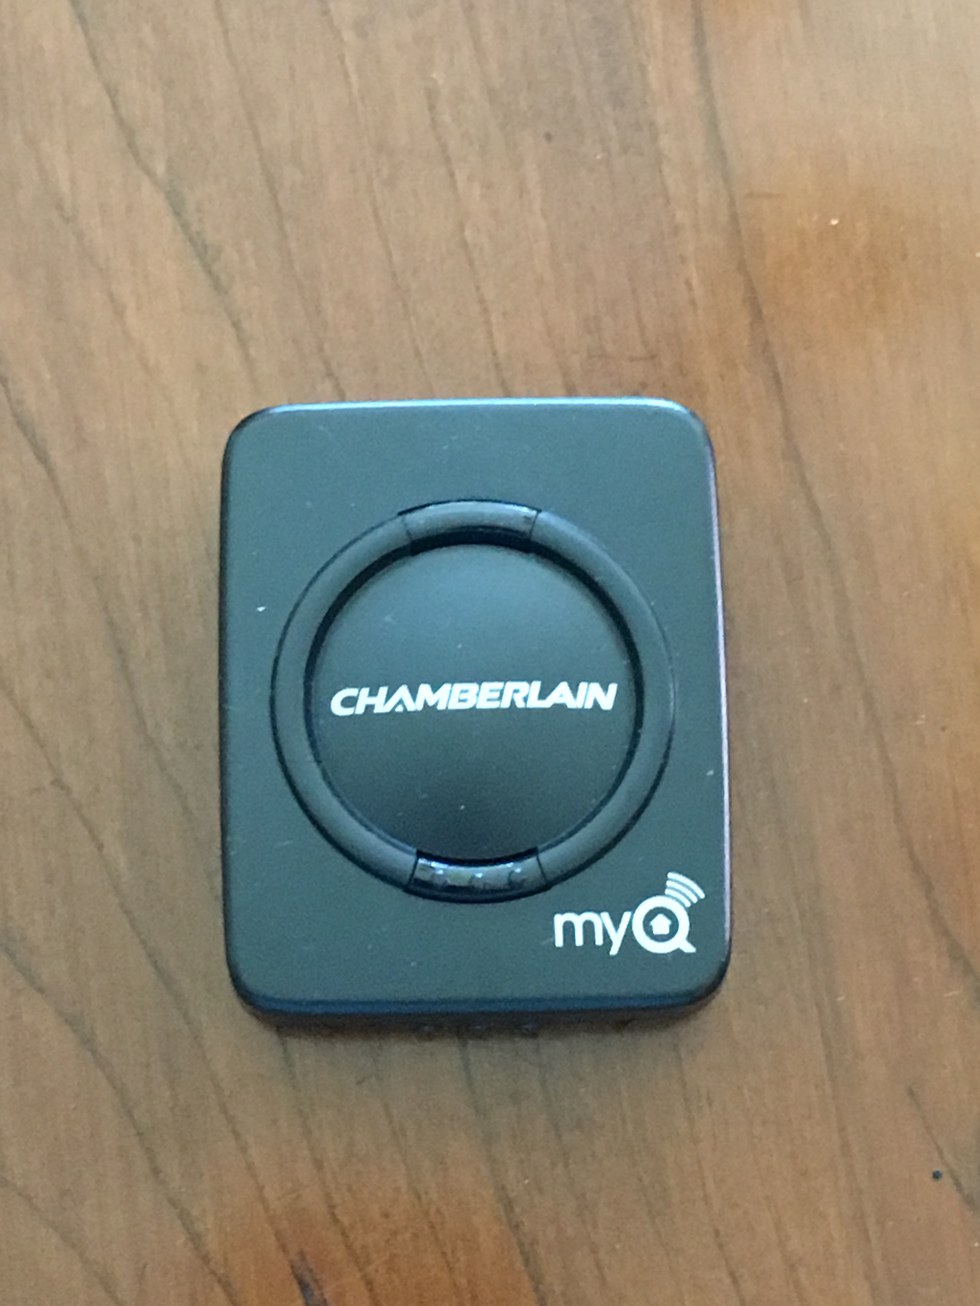 Chamberlain MyQ Garage Door Sensor